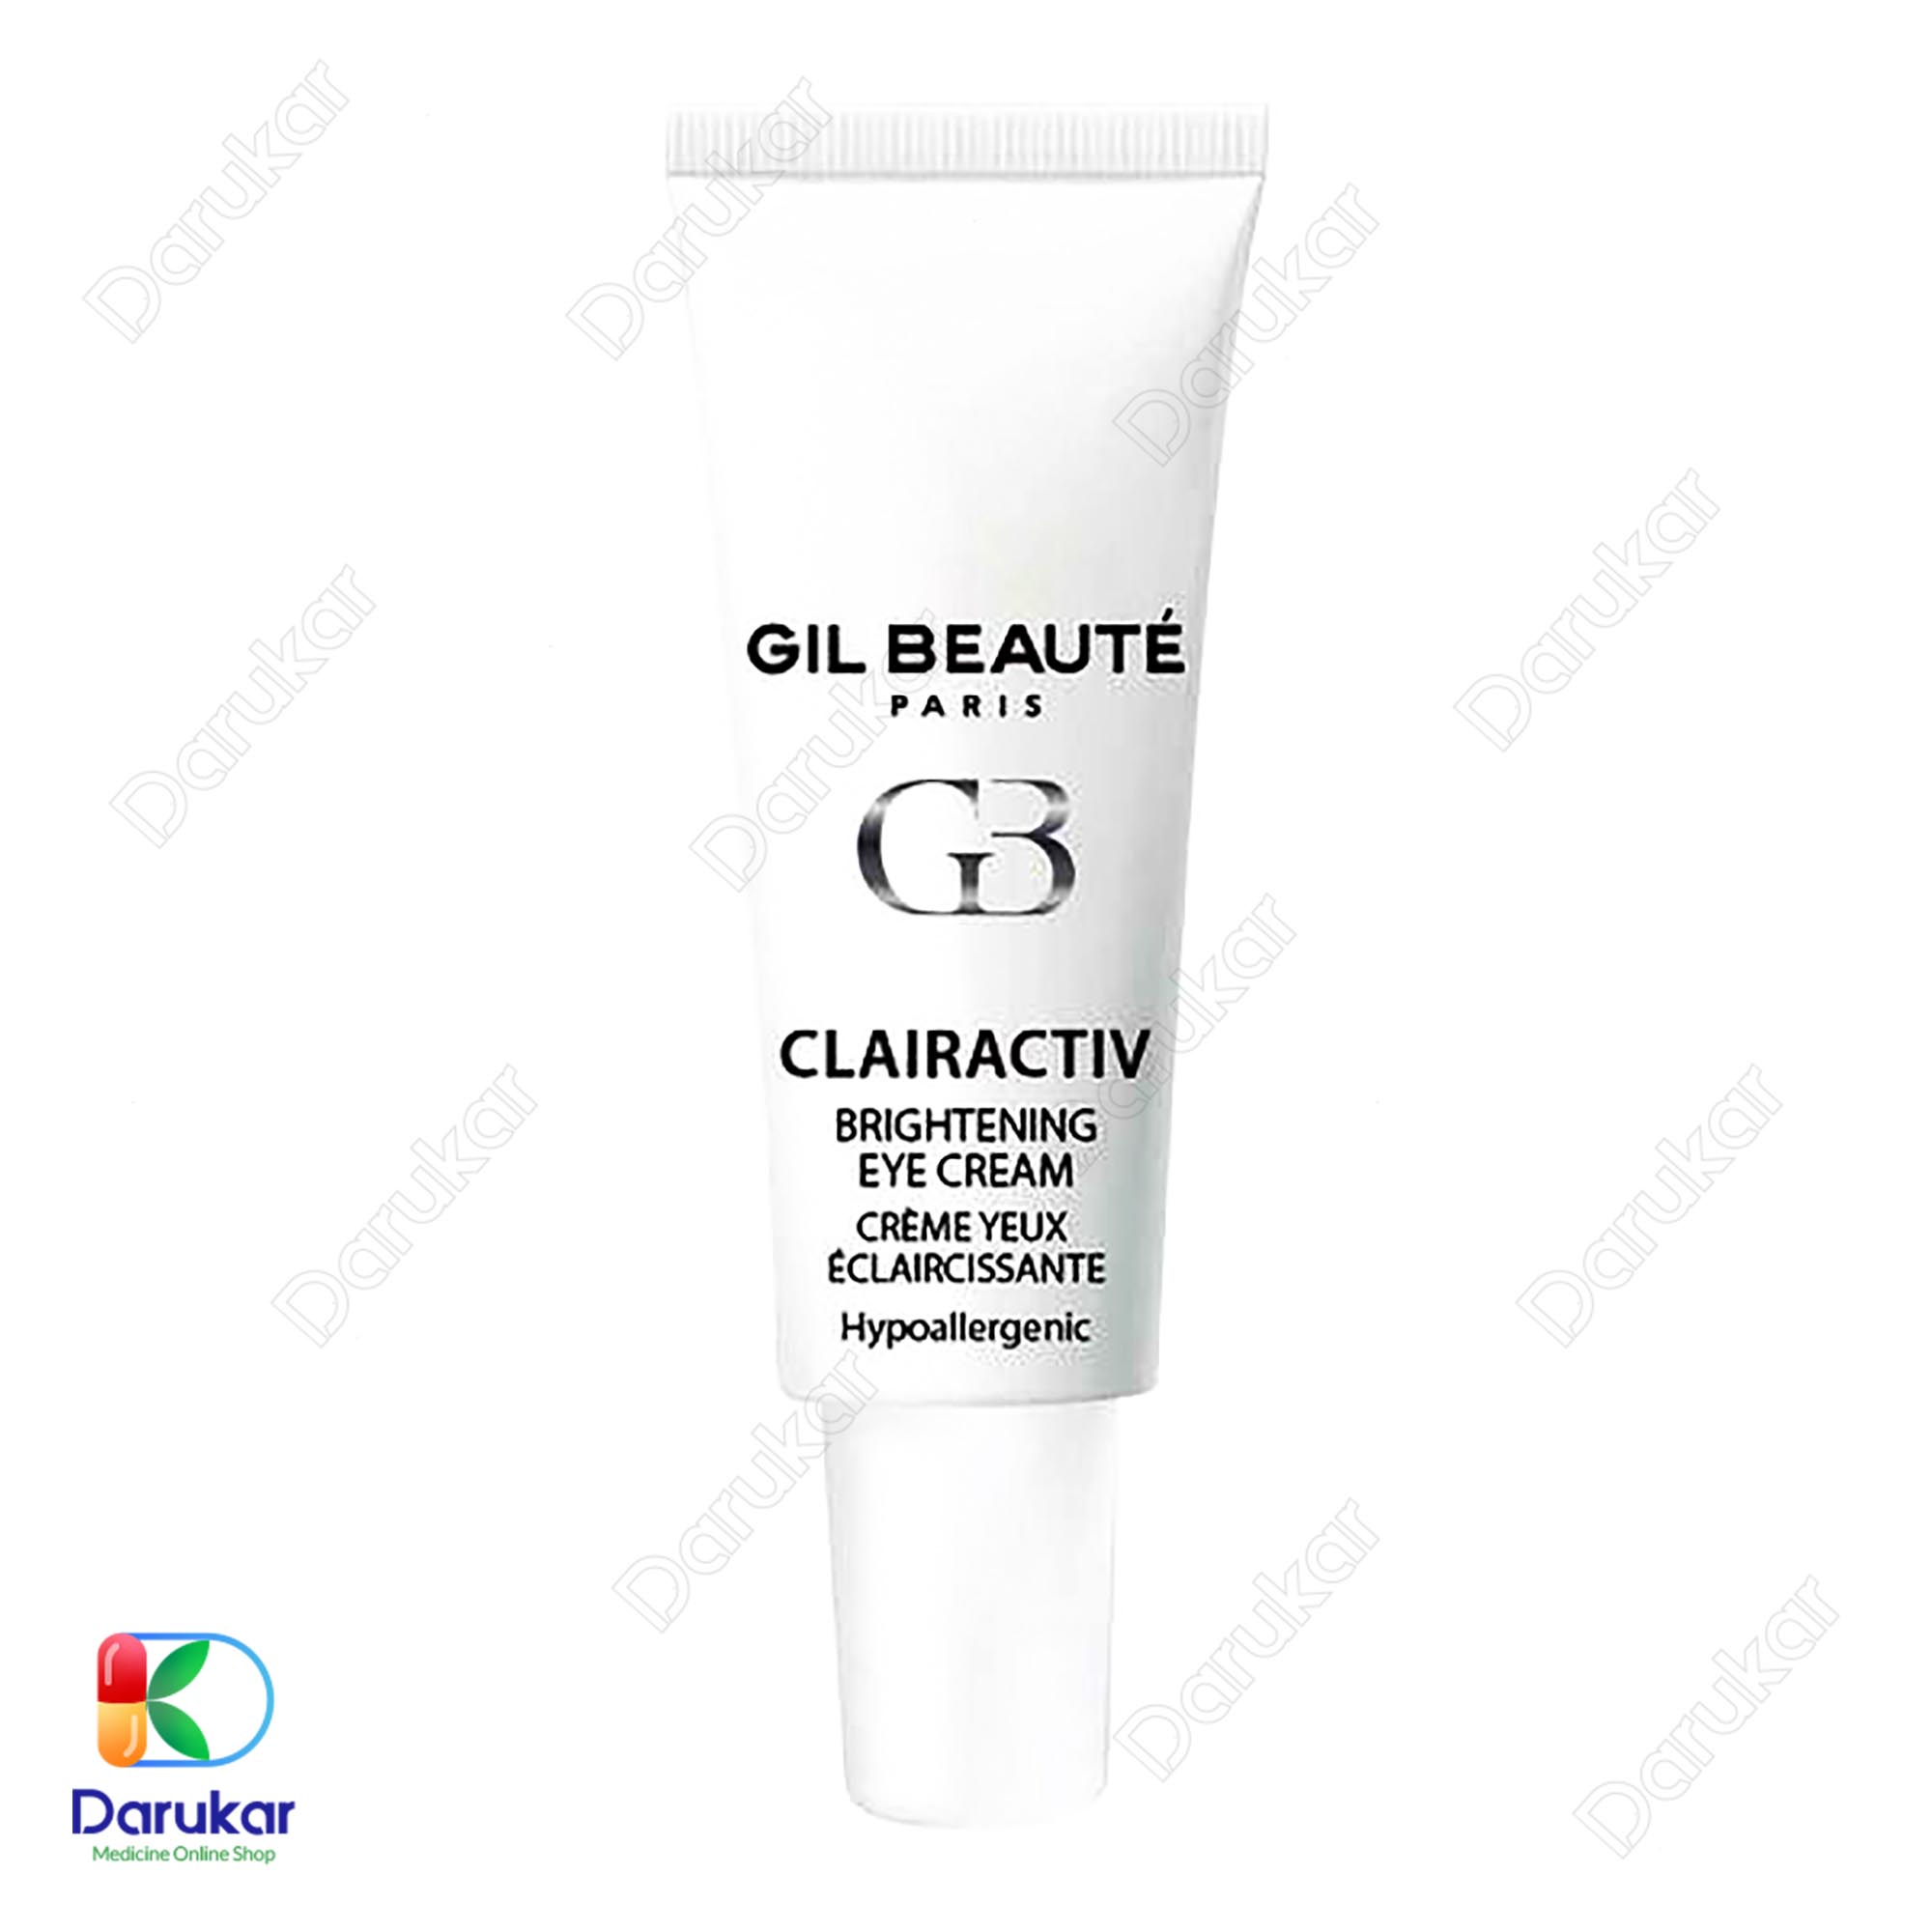 Gil Beaute Clairactive Brightening Eye Cream 2